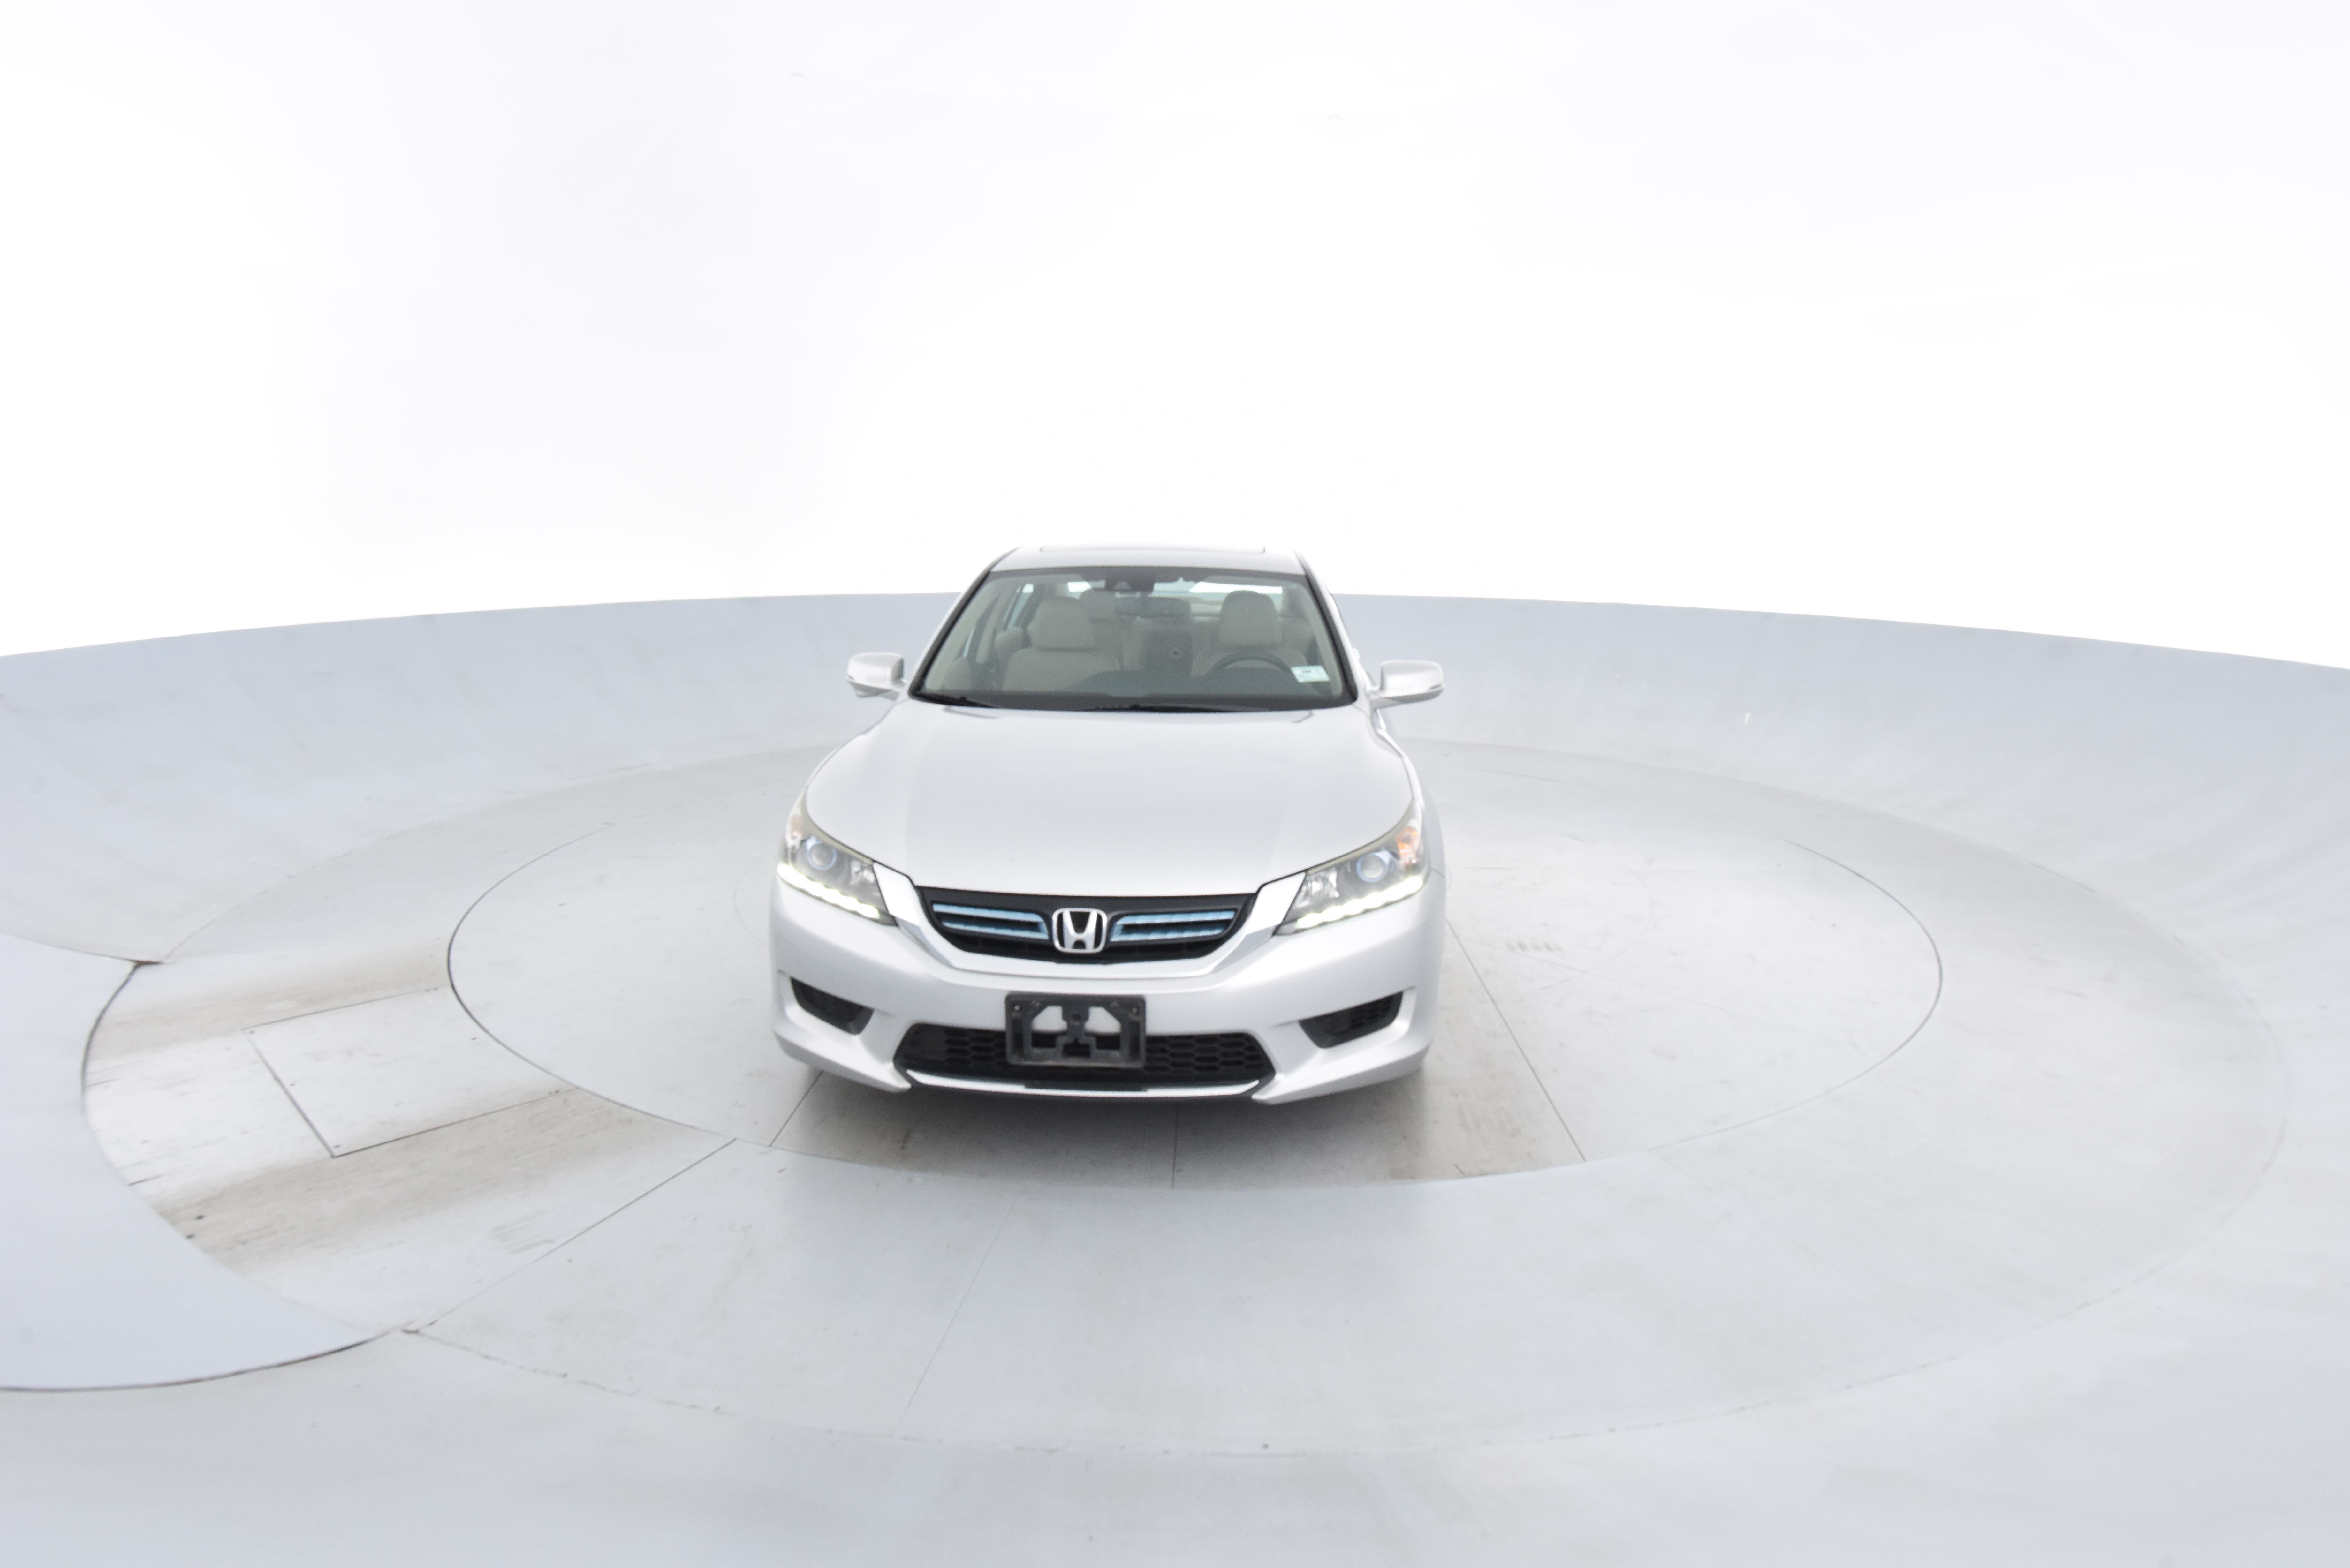 Used 2015 Honda Accord Hybrid | Carvana